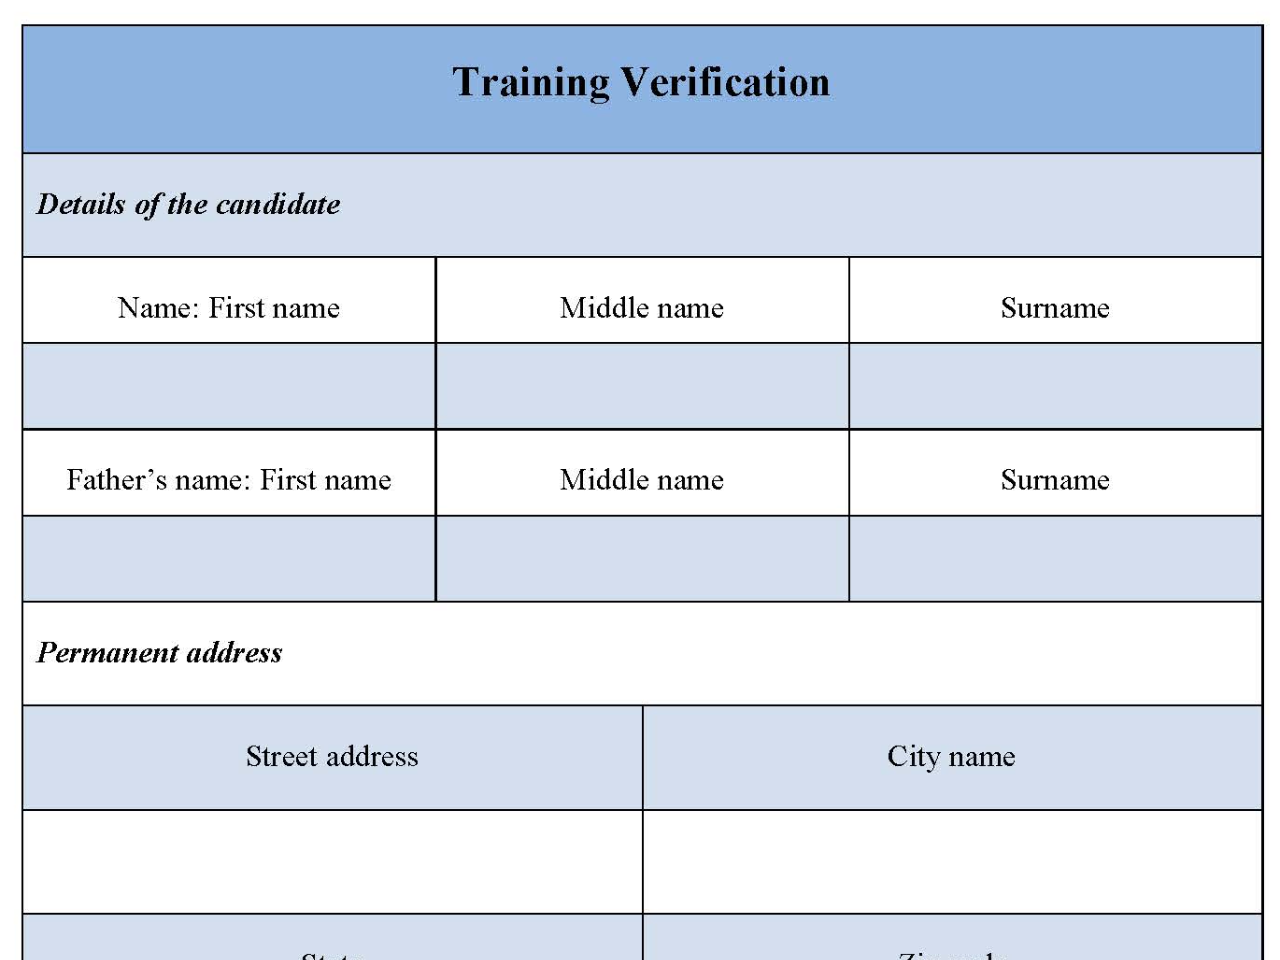 Training Verification Form